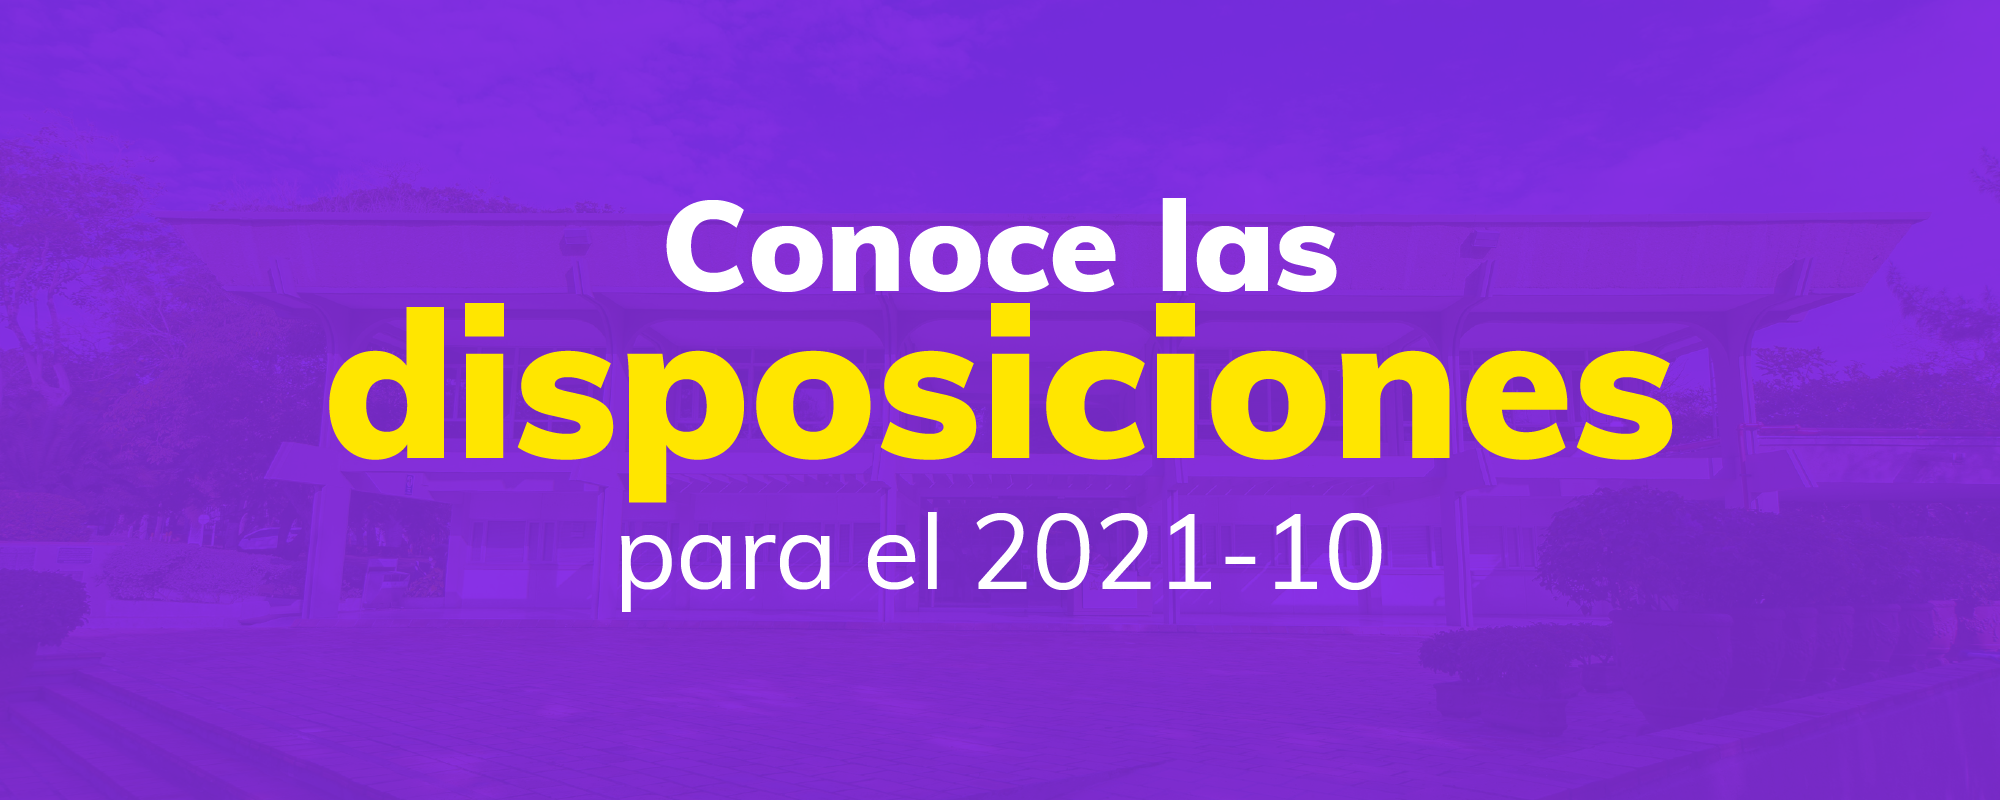 banner semestre 2021-10